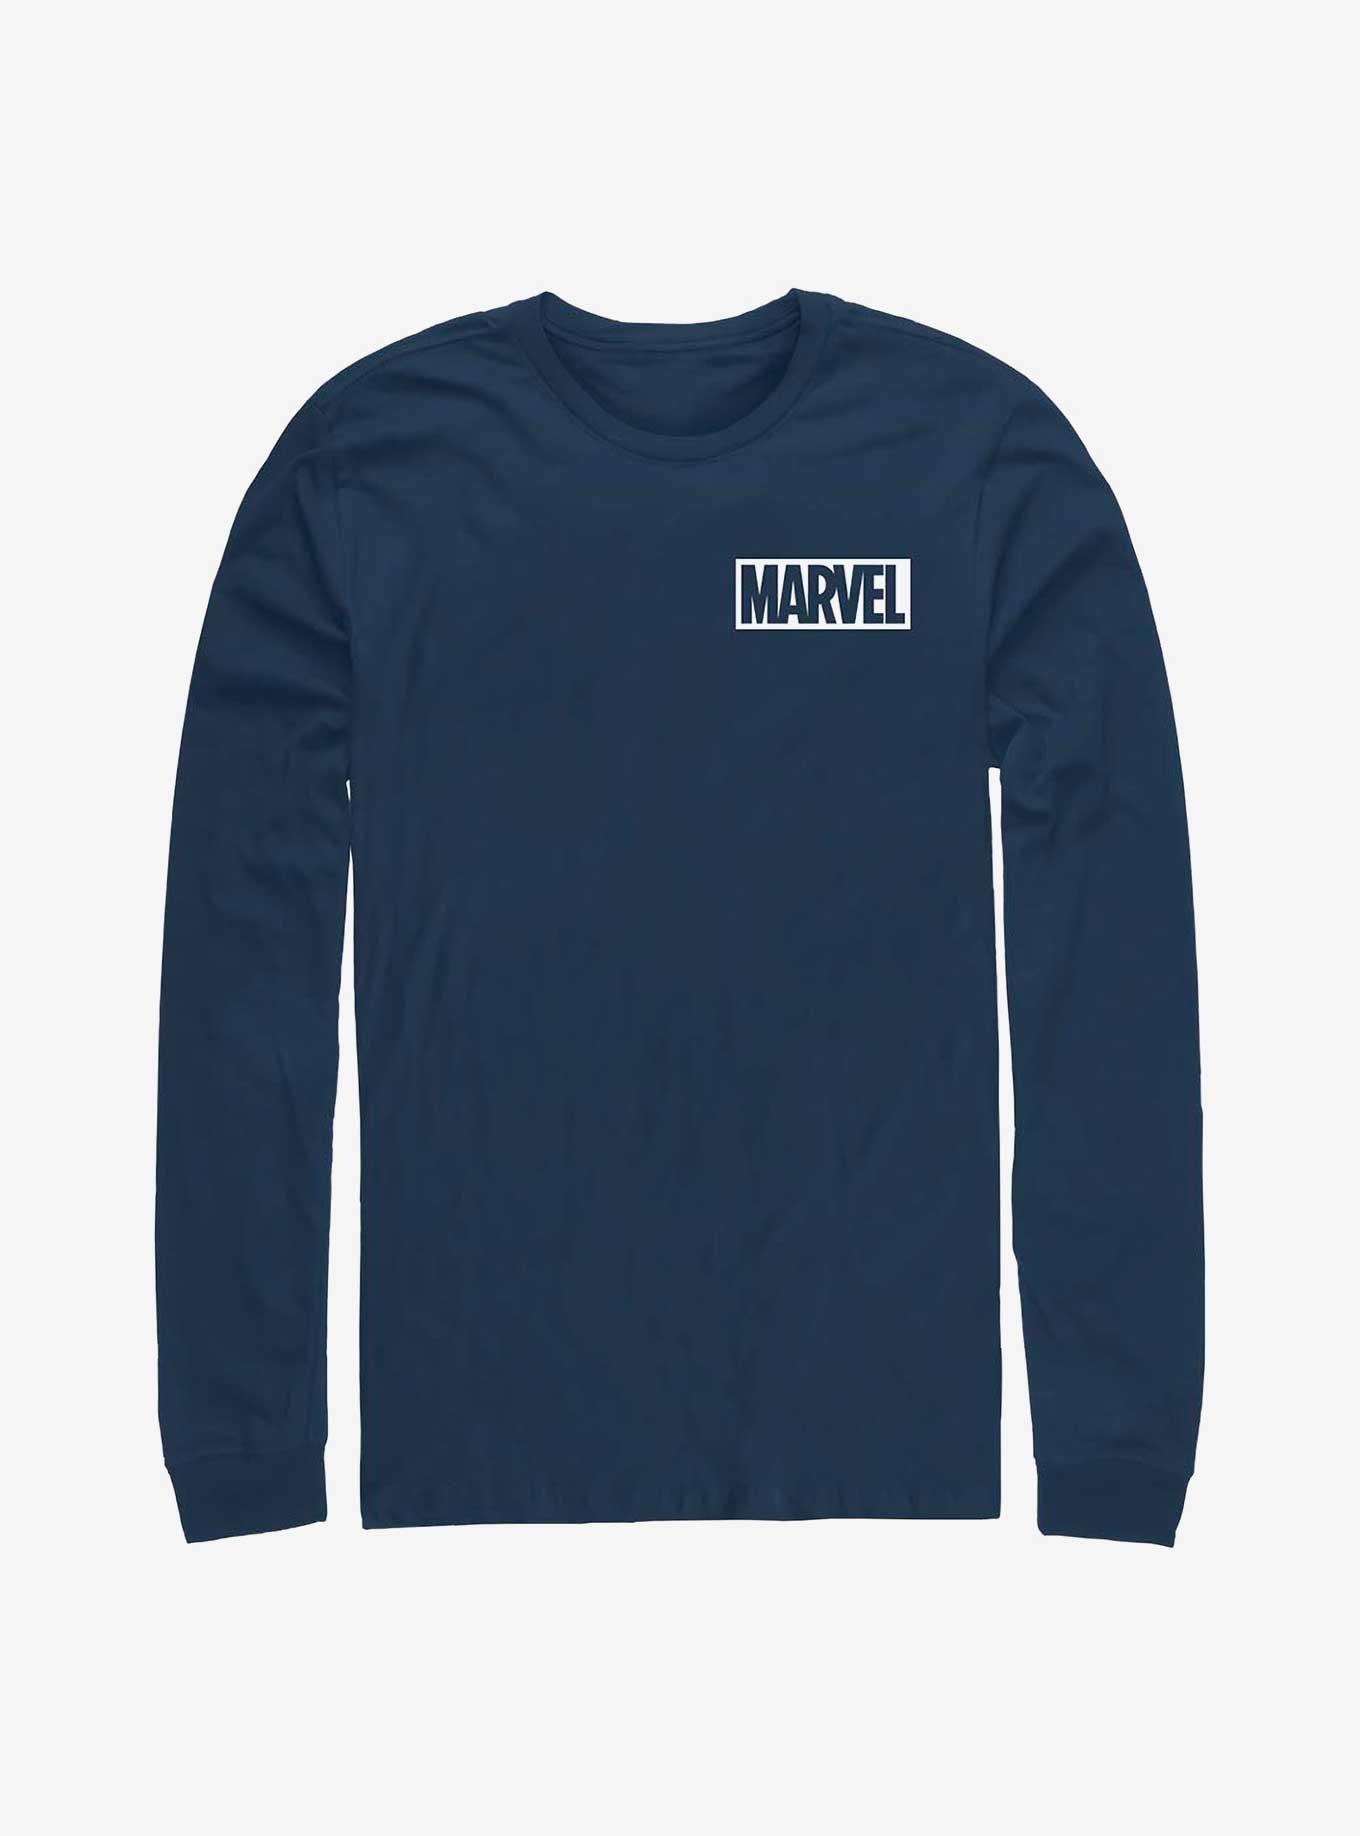 Marvel Pocket Logo Long-Sleeve T-Shirt